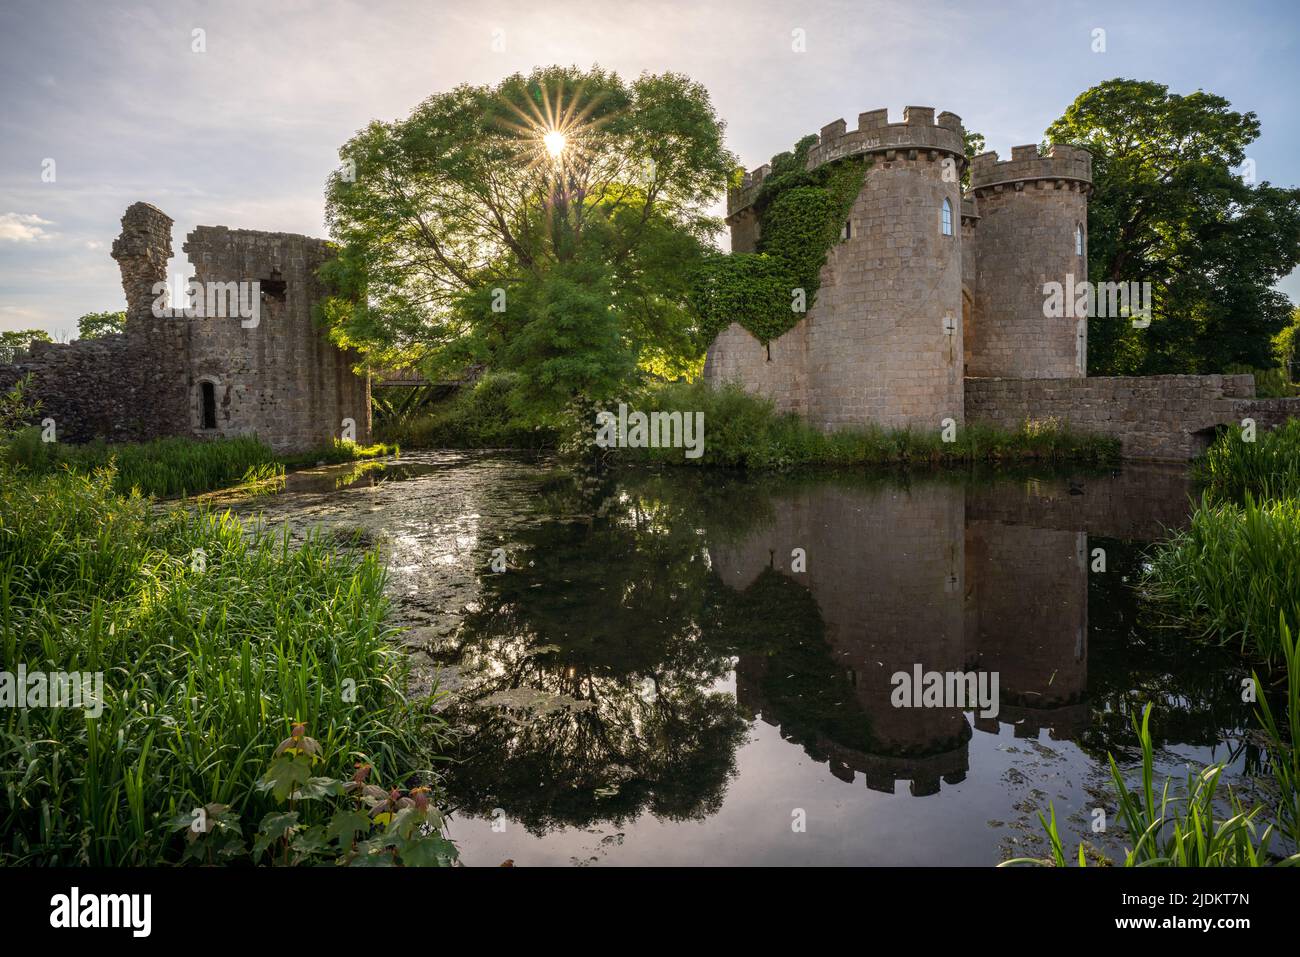 Fotografía nocturna del Castillo de Whittington en Shropshire, Inglaterra Foto de stock